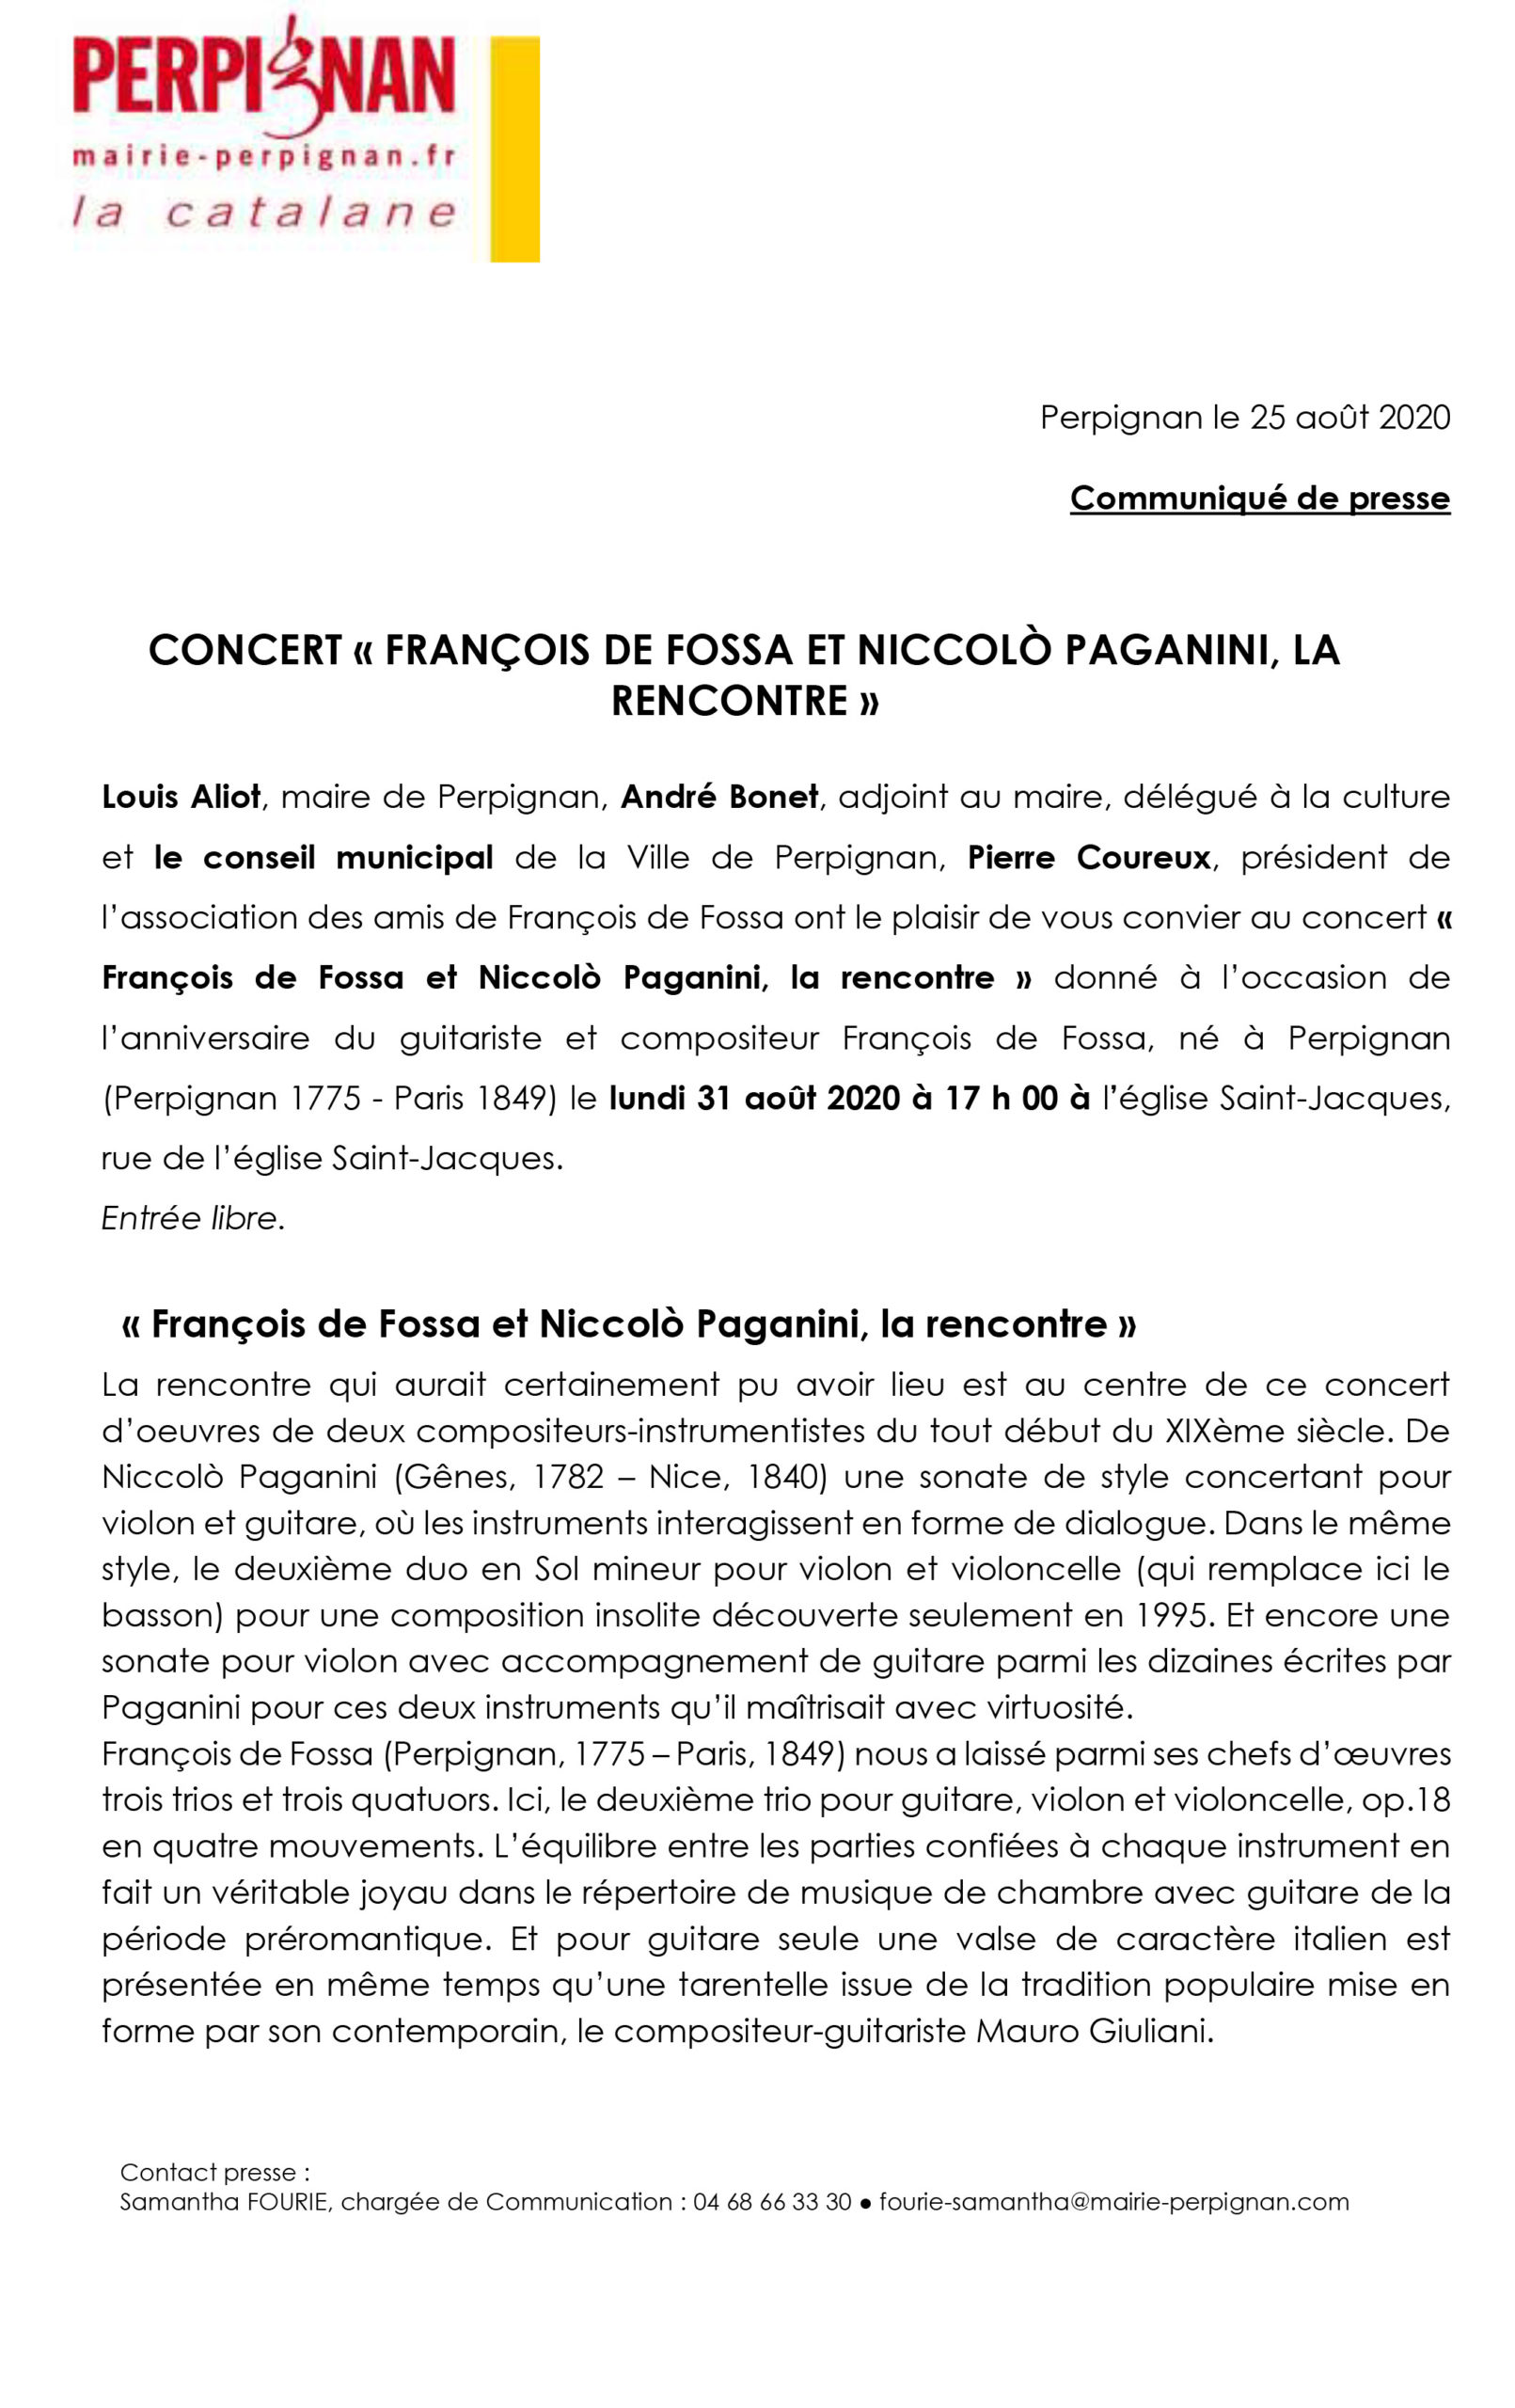 CP Concert« François de Fossa et Niccolò Paganini, la rencontre »